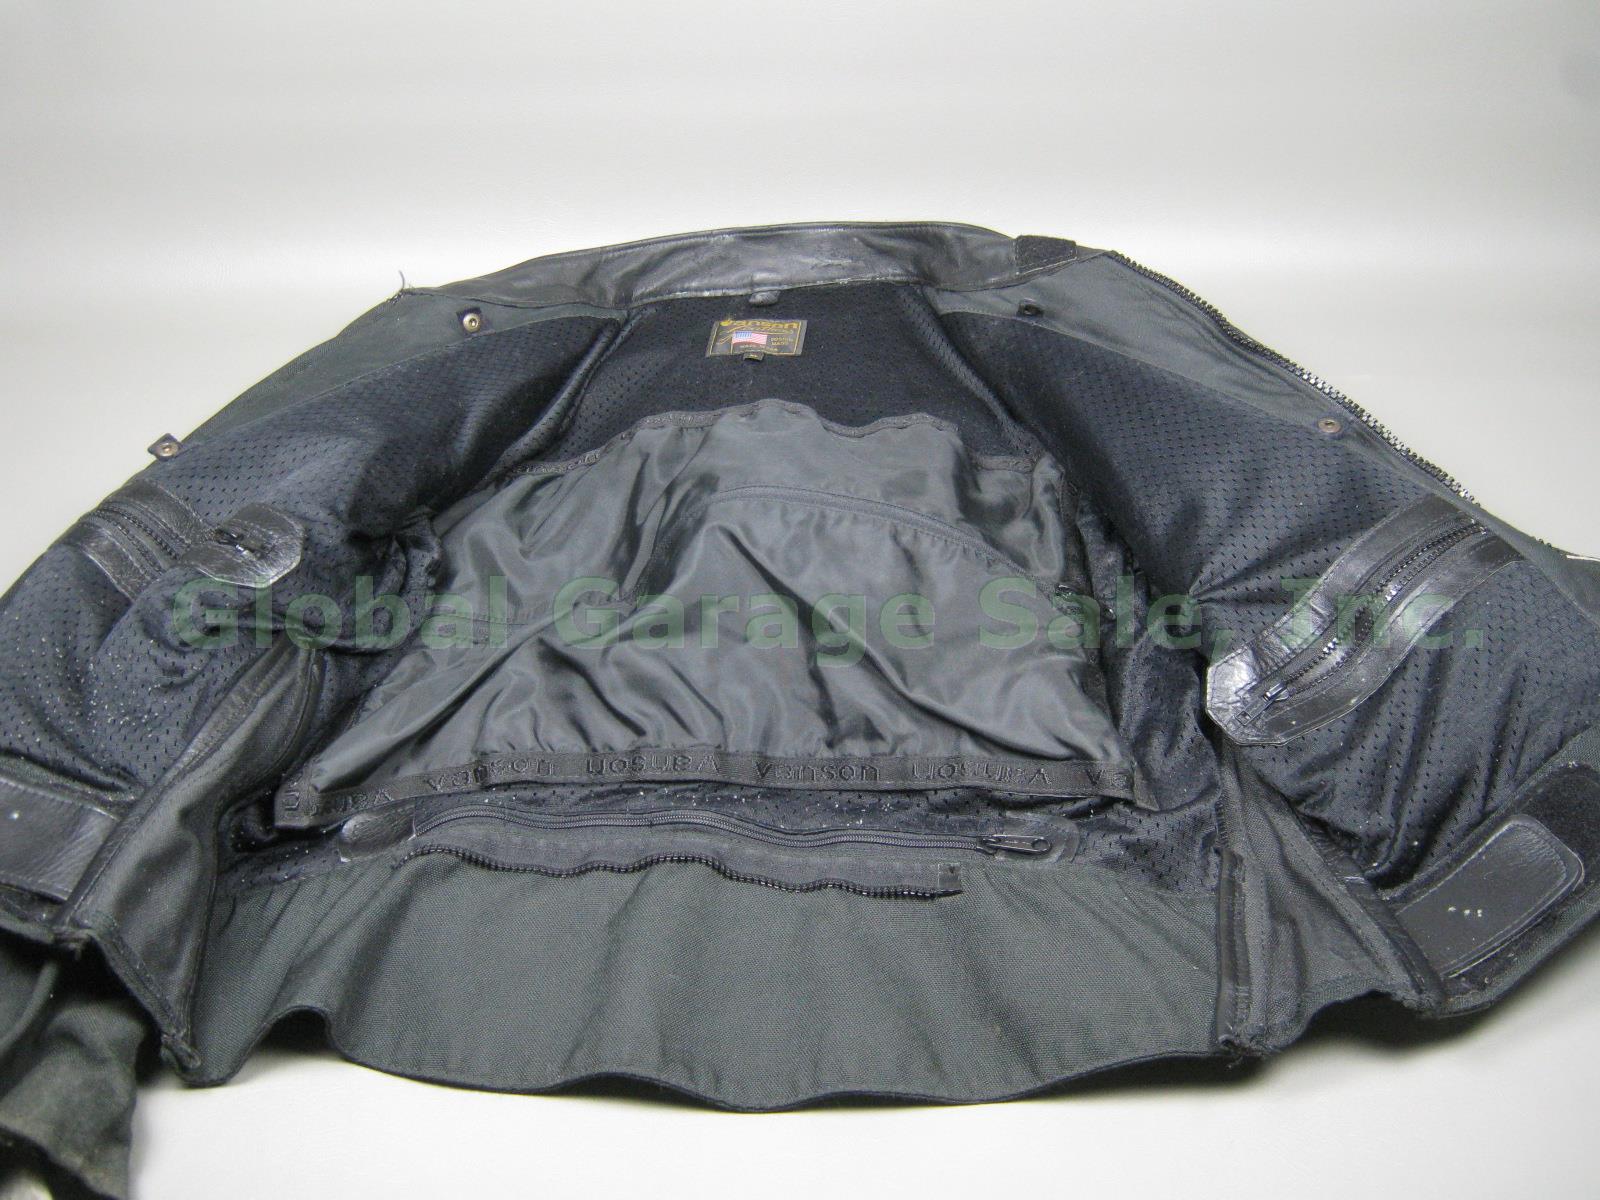 Mens Black Vanson Leathers Motorcycle Jacket Size XL W/ Protective Armor Padding 3